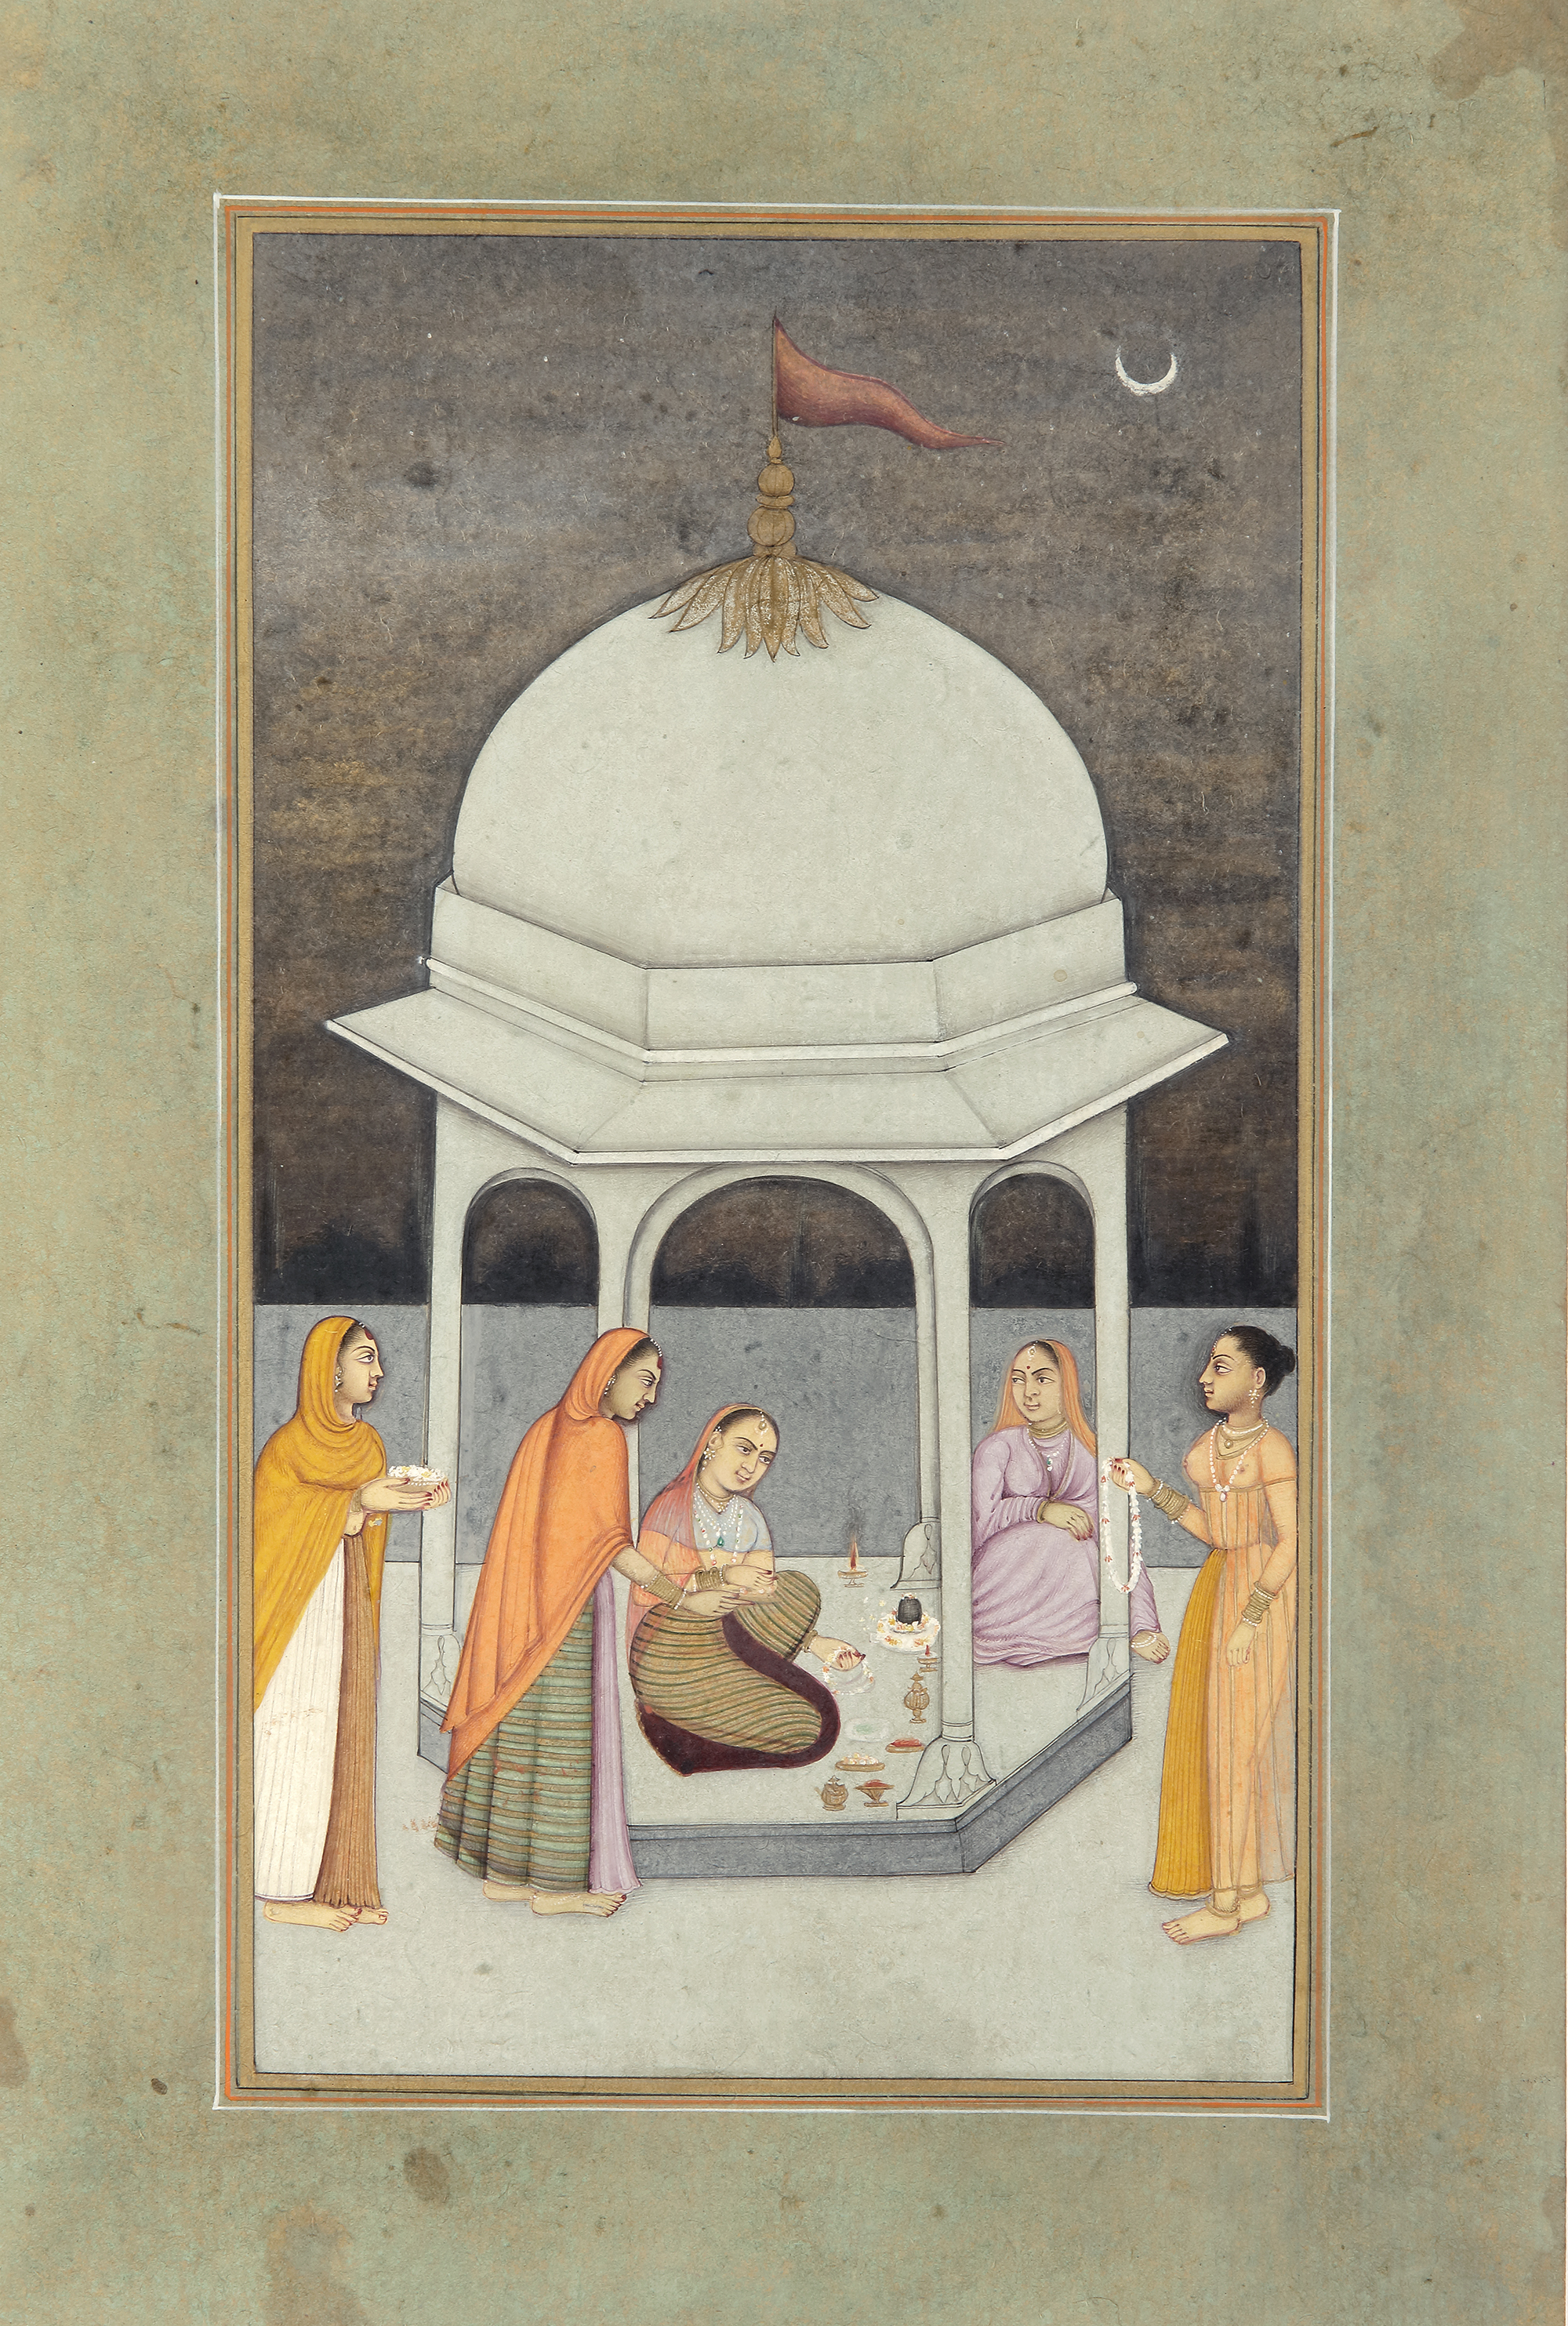 LADIES VISITING A SHRINE AT NIGHT UNDER A CANOPY, BIKANER, RAJASTHAN, NORTH INDIA, CIRCA 1780 - Image 3 of 4